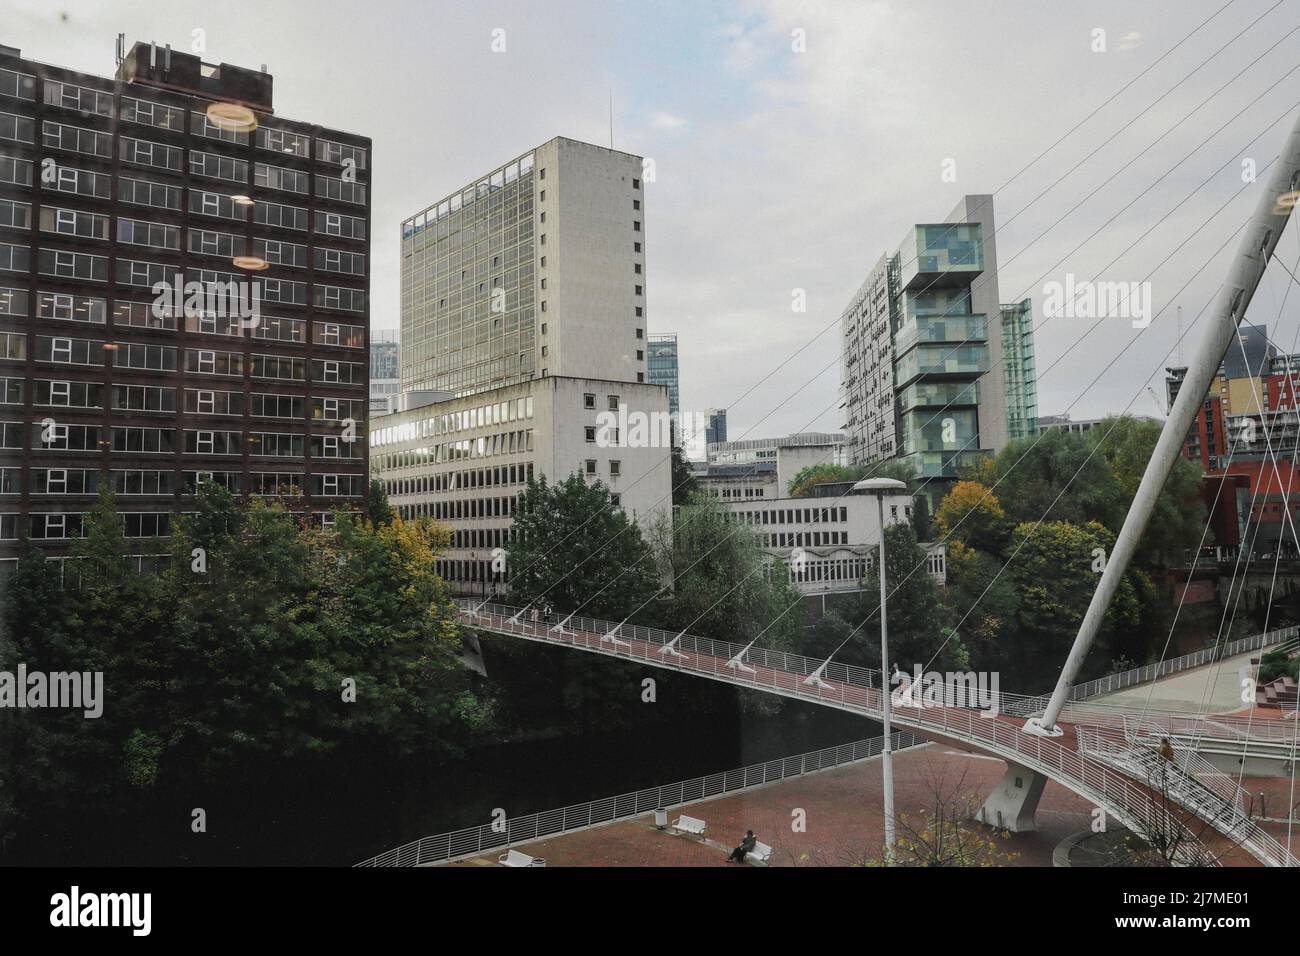 Trinity Bridge, Manchester, UK Stock Photo